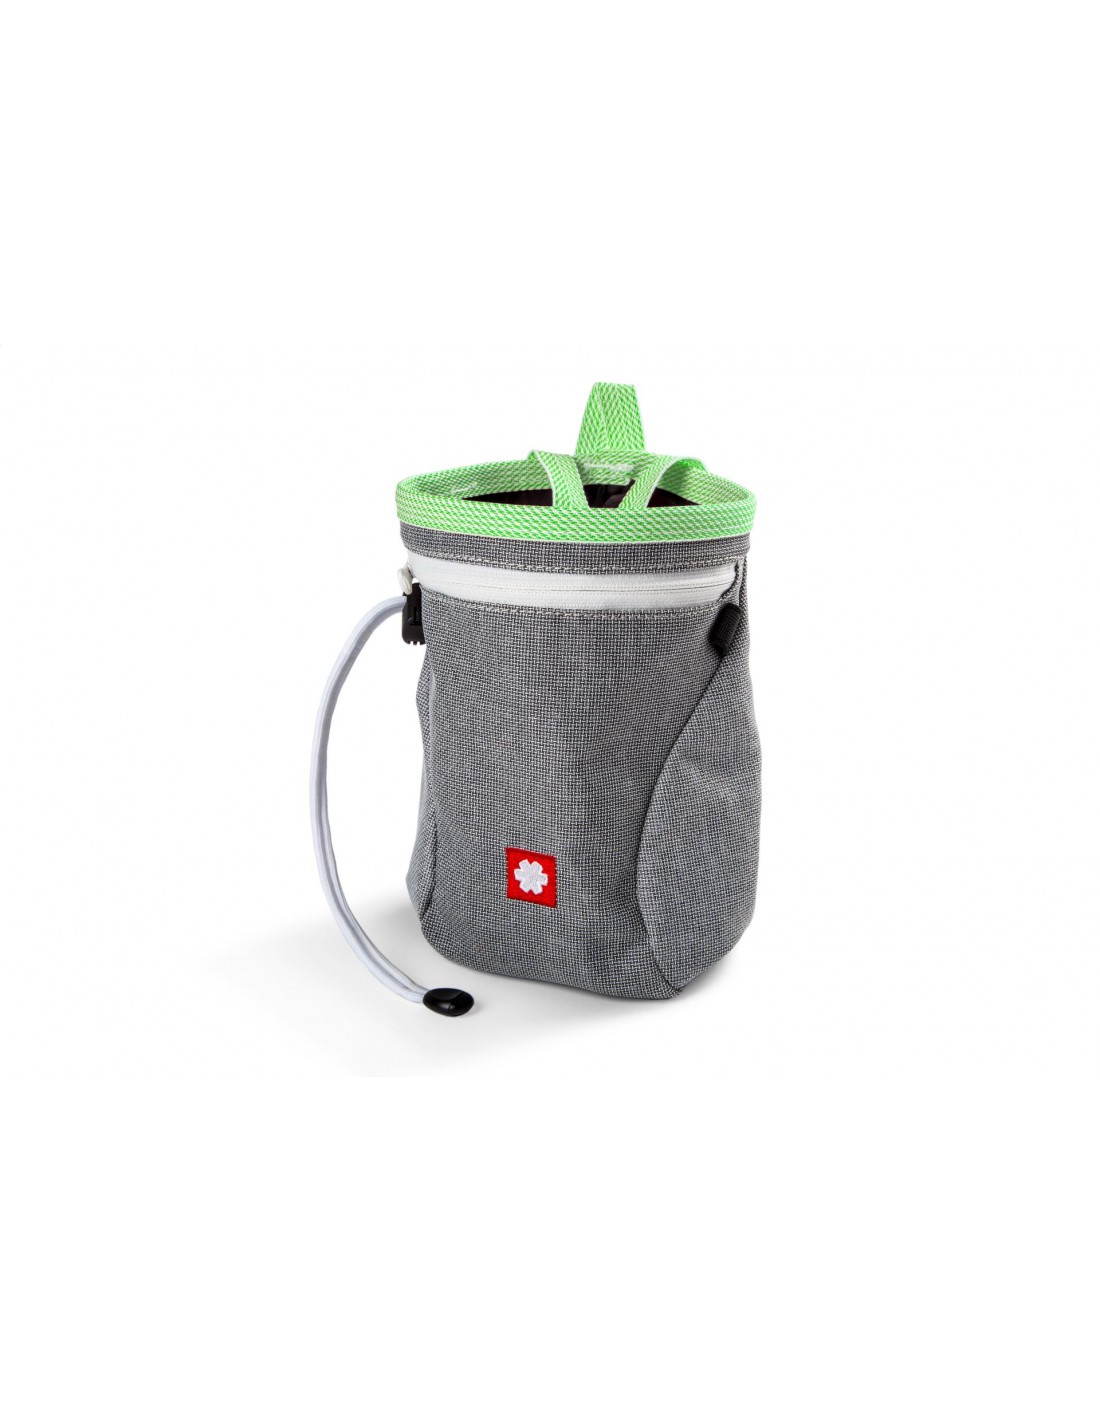 Ocun Chalkbag Dusty ECO + Belt, grey/green Chalkbag Verwendung - Klettern, Chalkbag Farbe - Grau, von Ocun